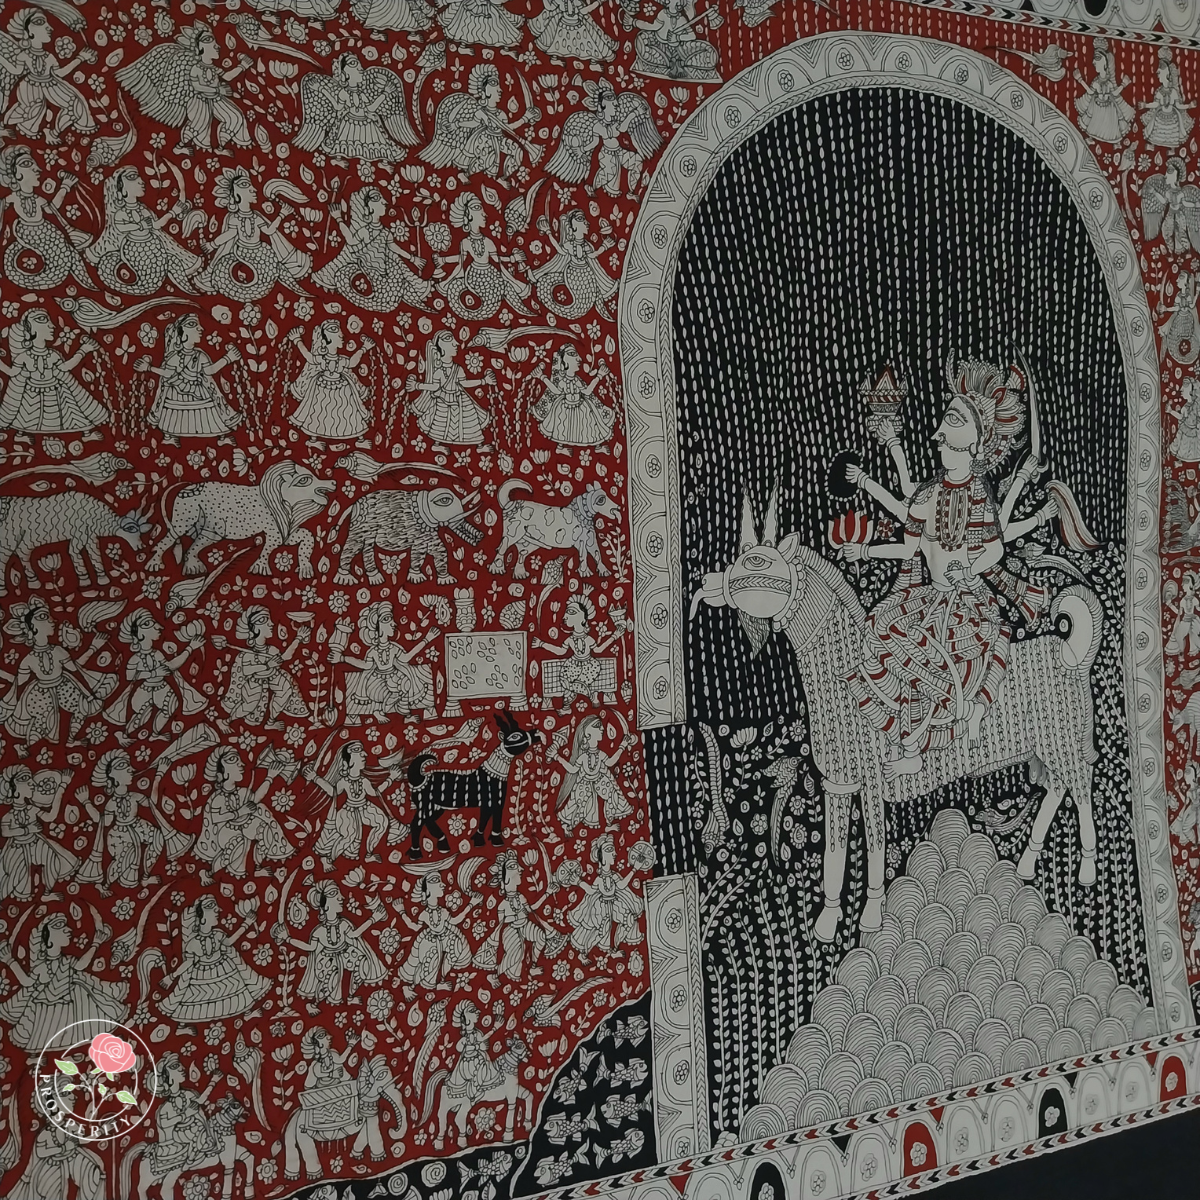 Pavagadh wali Durga - Mata ni Pachedi painting by Padma Shri awardee